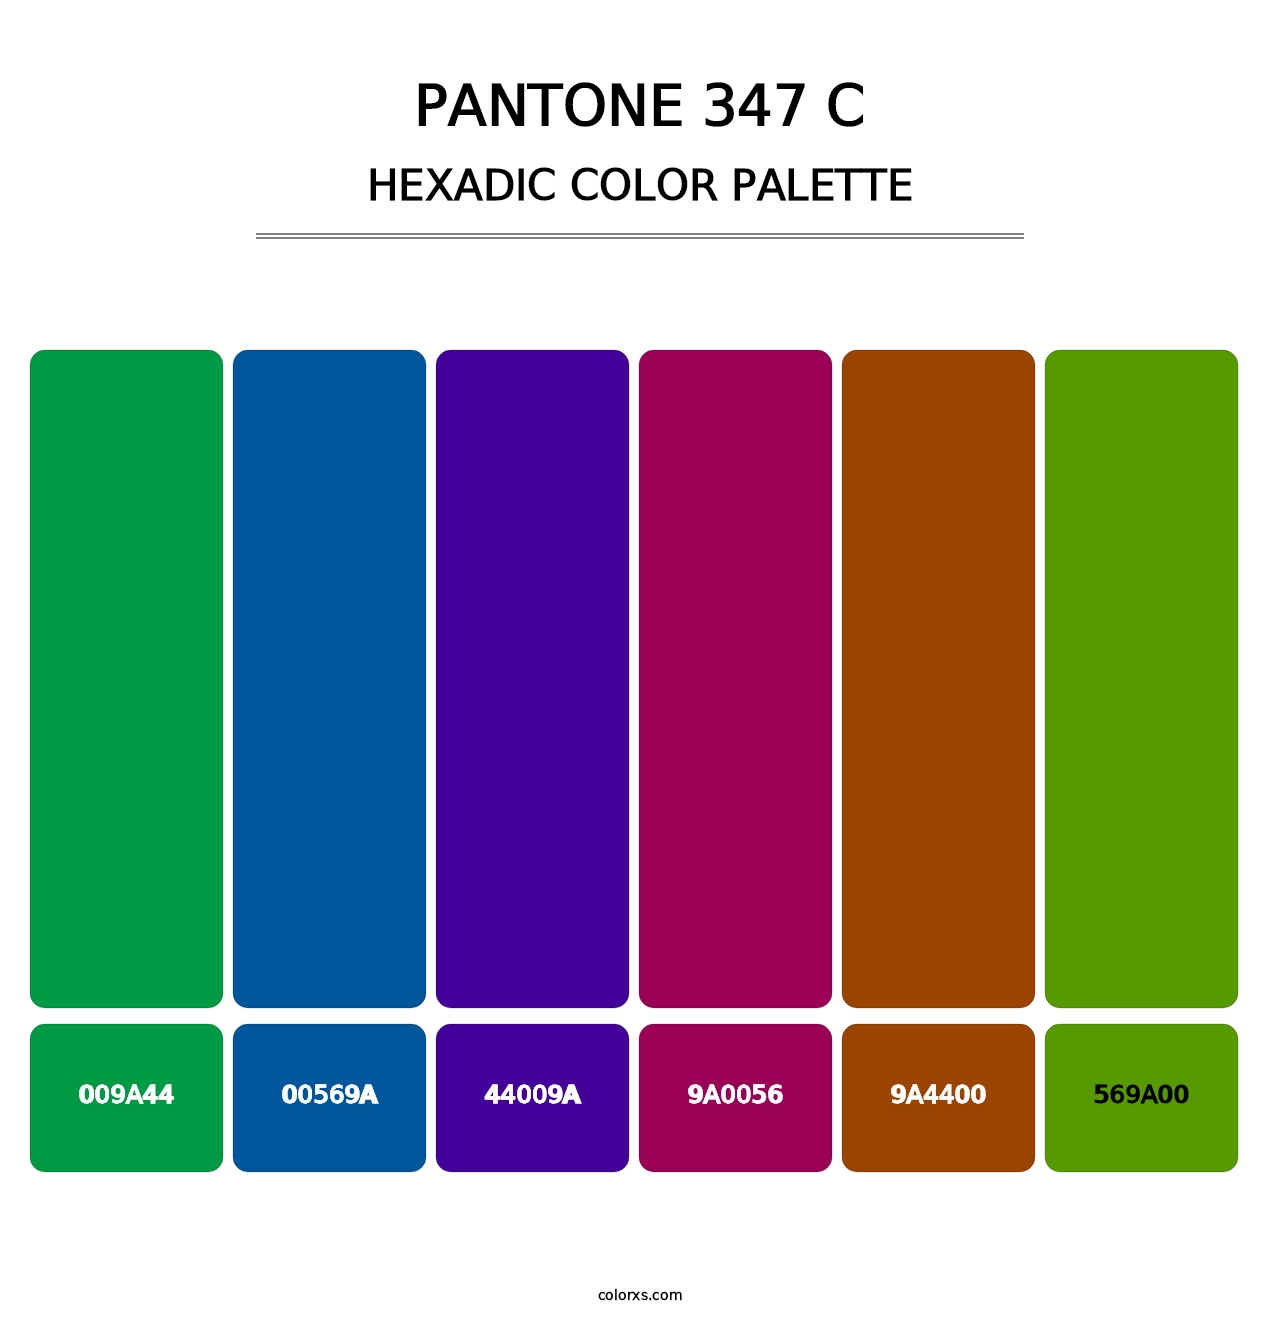 PANTONE 347 C - Hexadic Color Palette